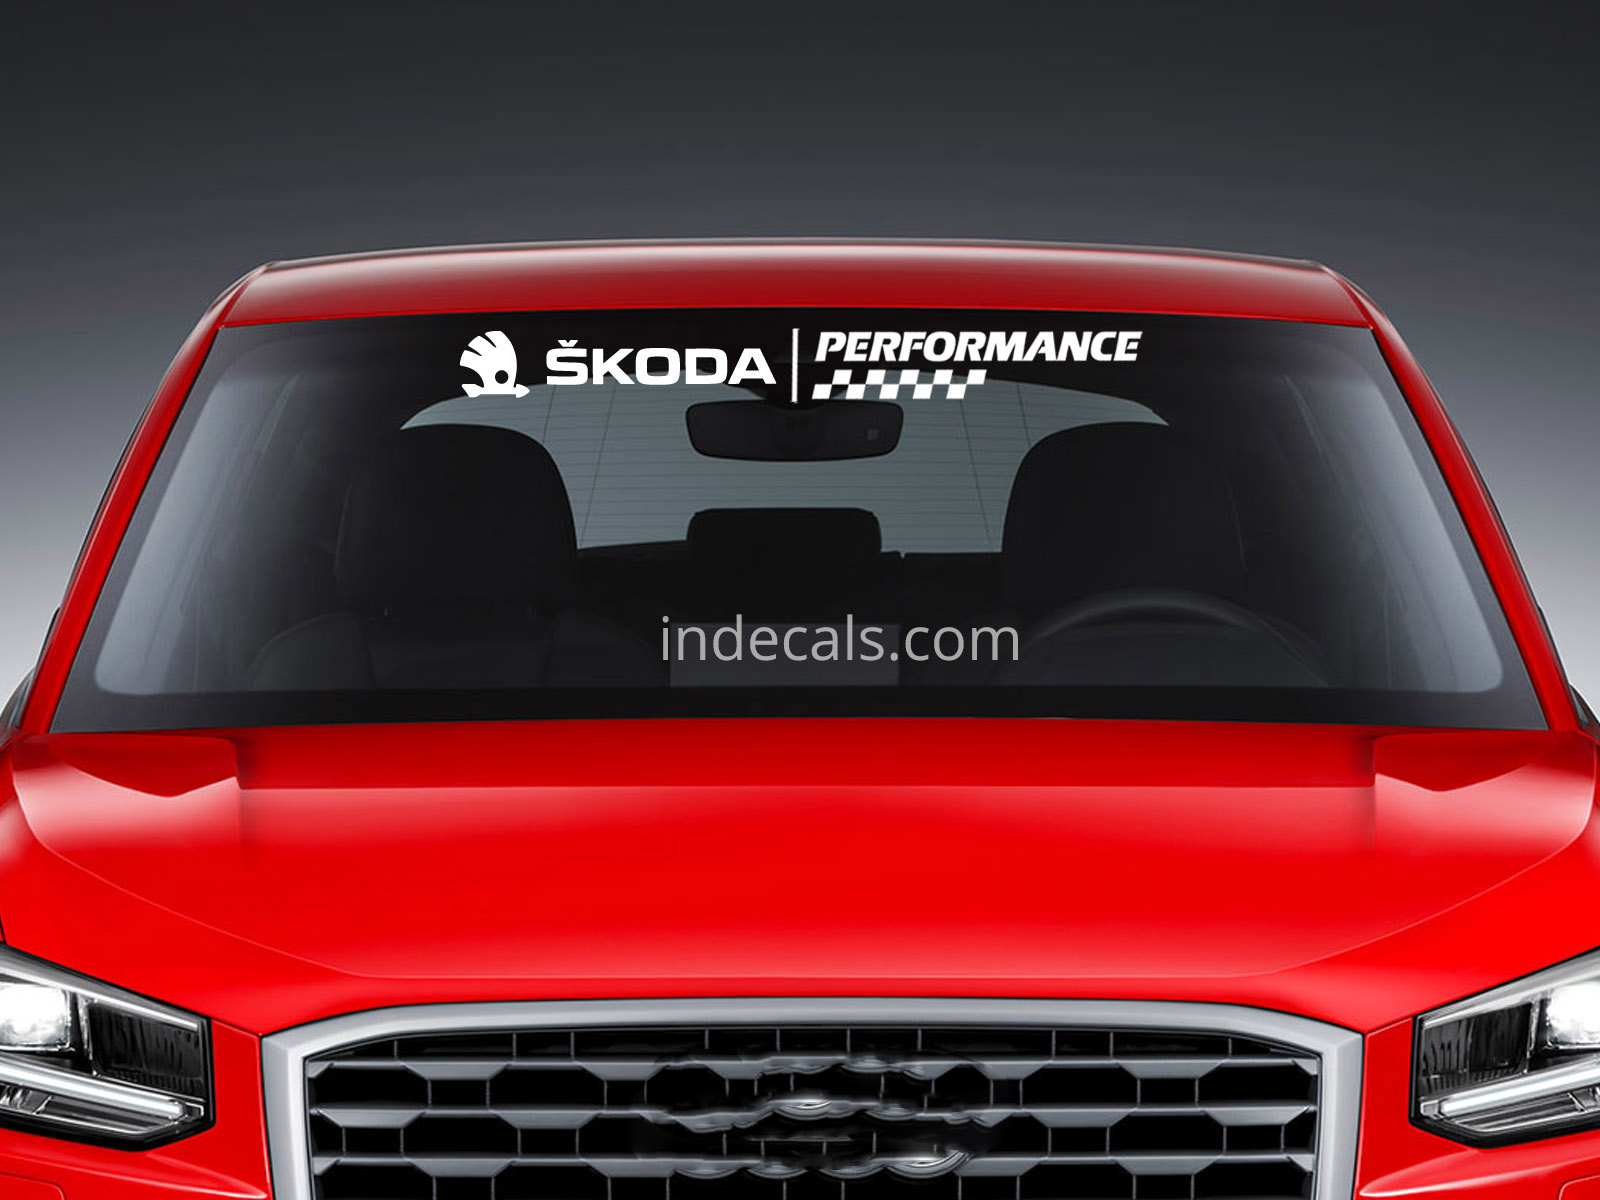 1 x Skoda Performance Sticker for Windshield or Back Window - White